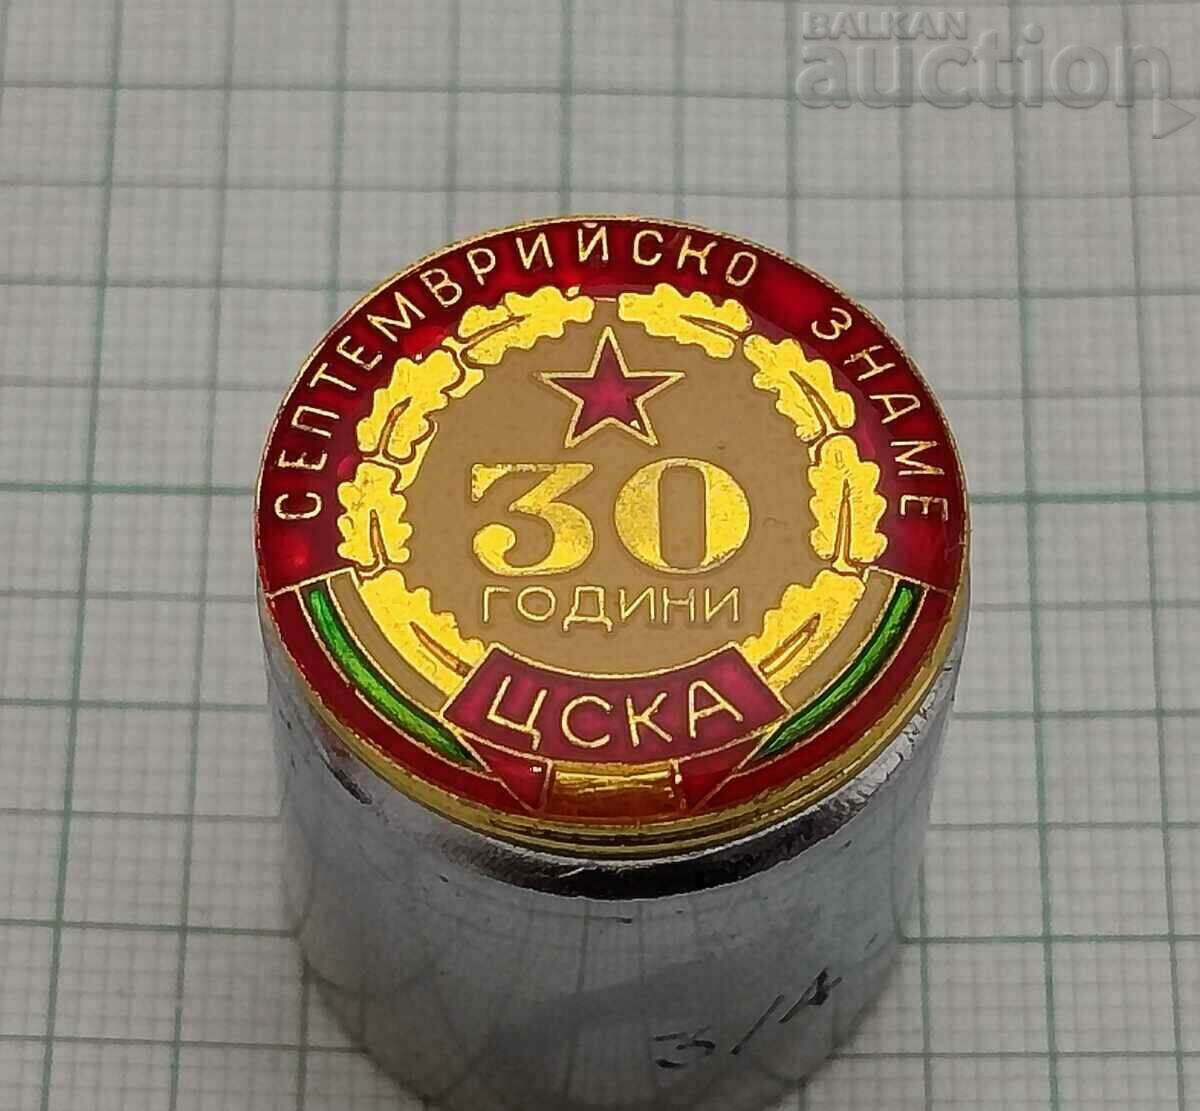 ЦСКА СЕПТЕМВРИЙСКО  ЗНАМЕ 30 г. ЗНАЧКА